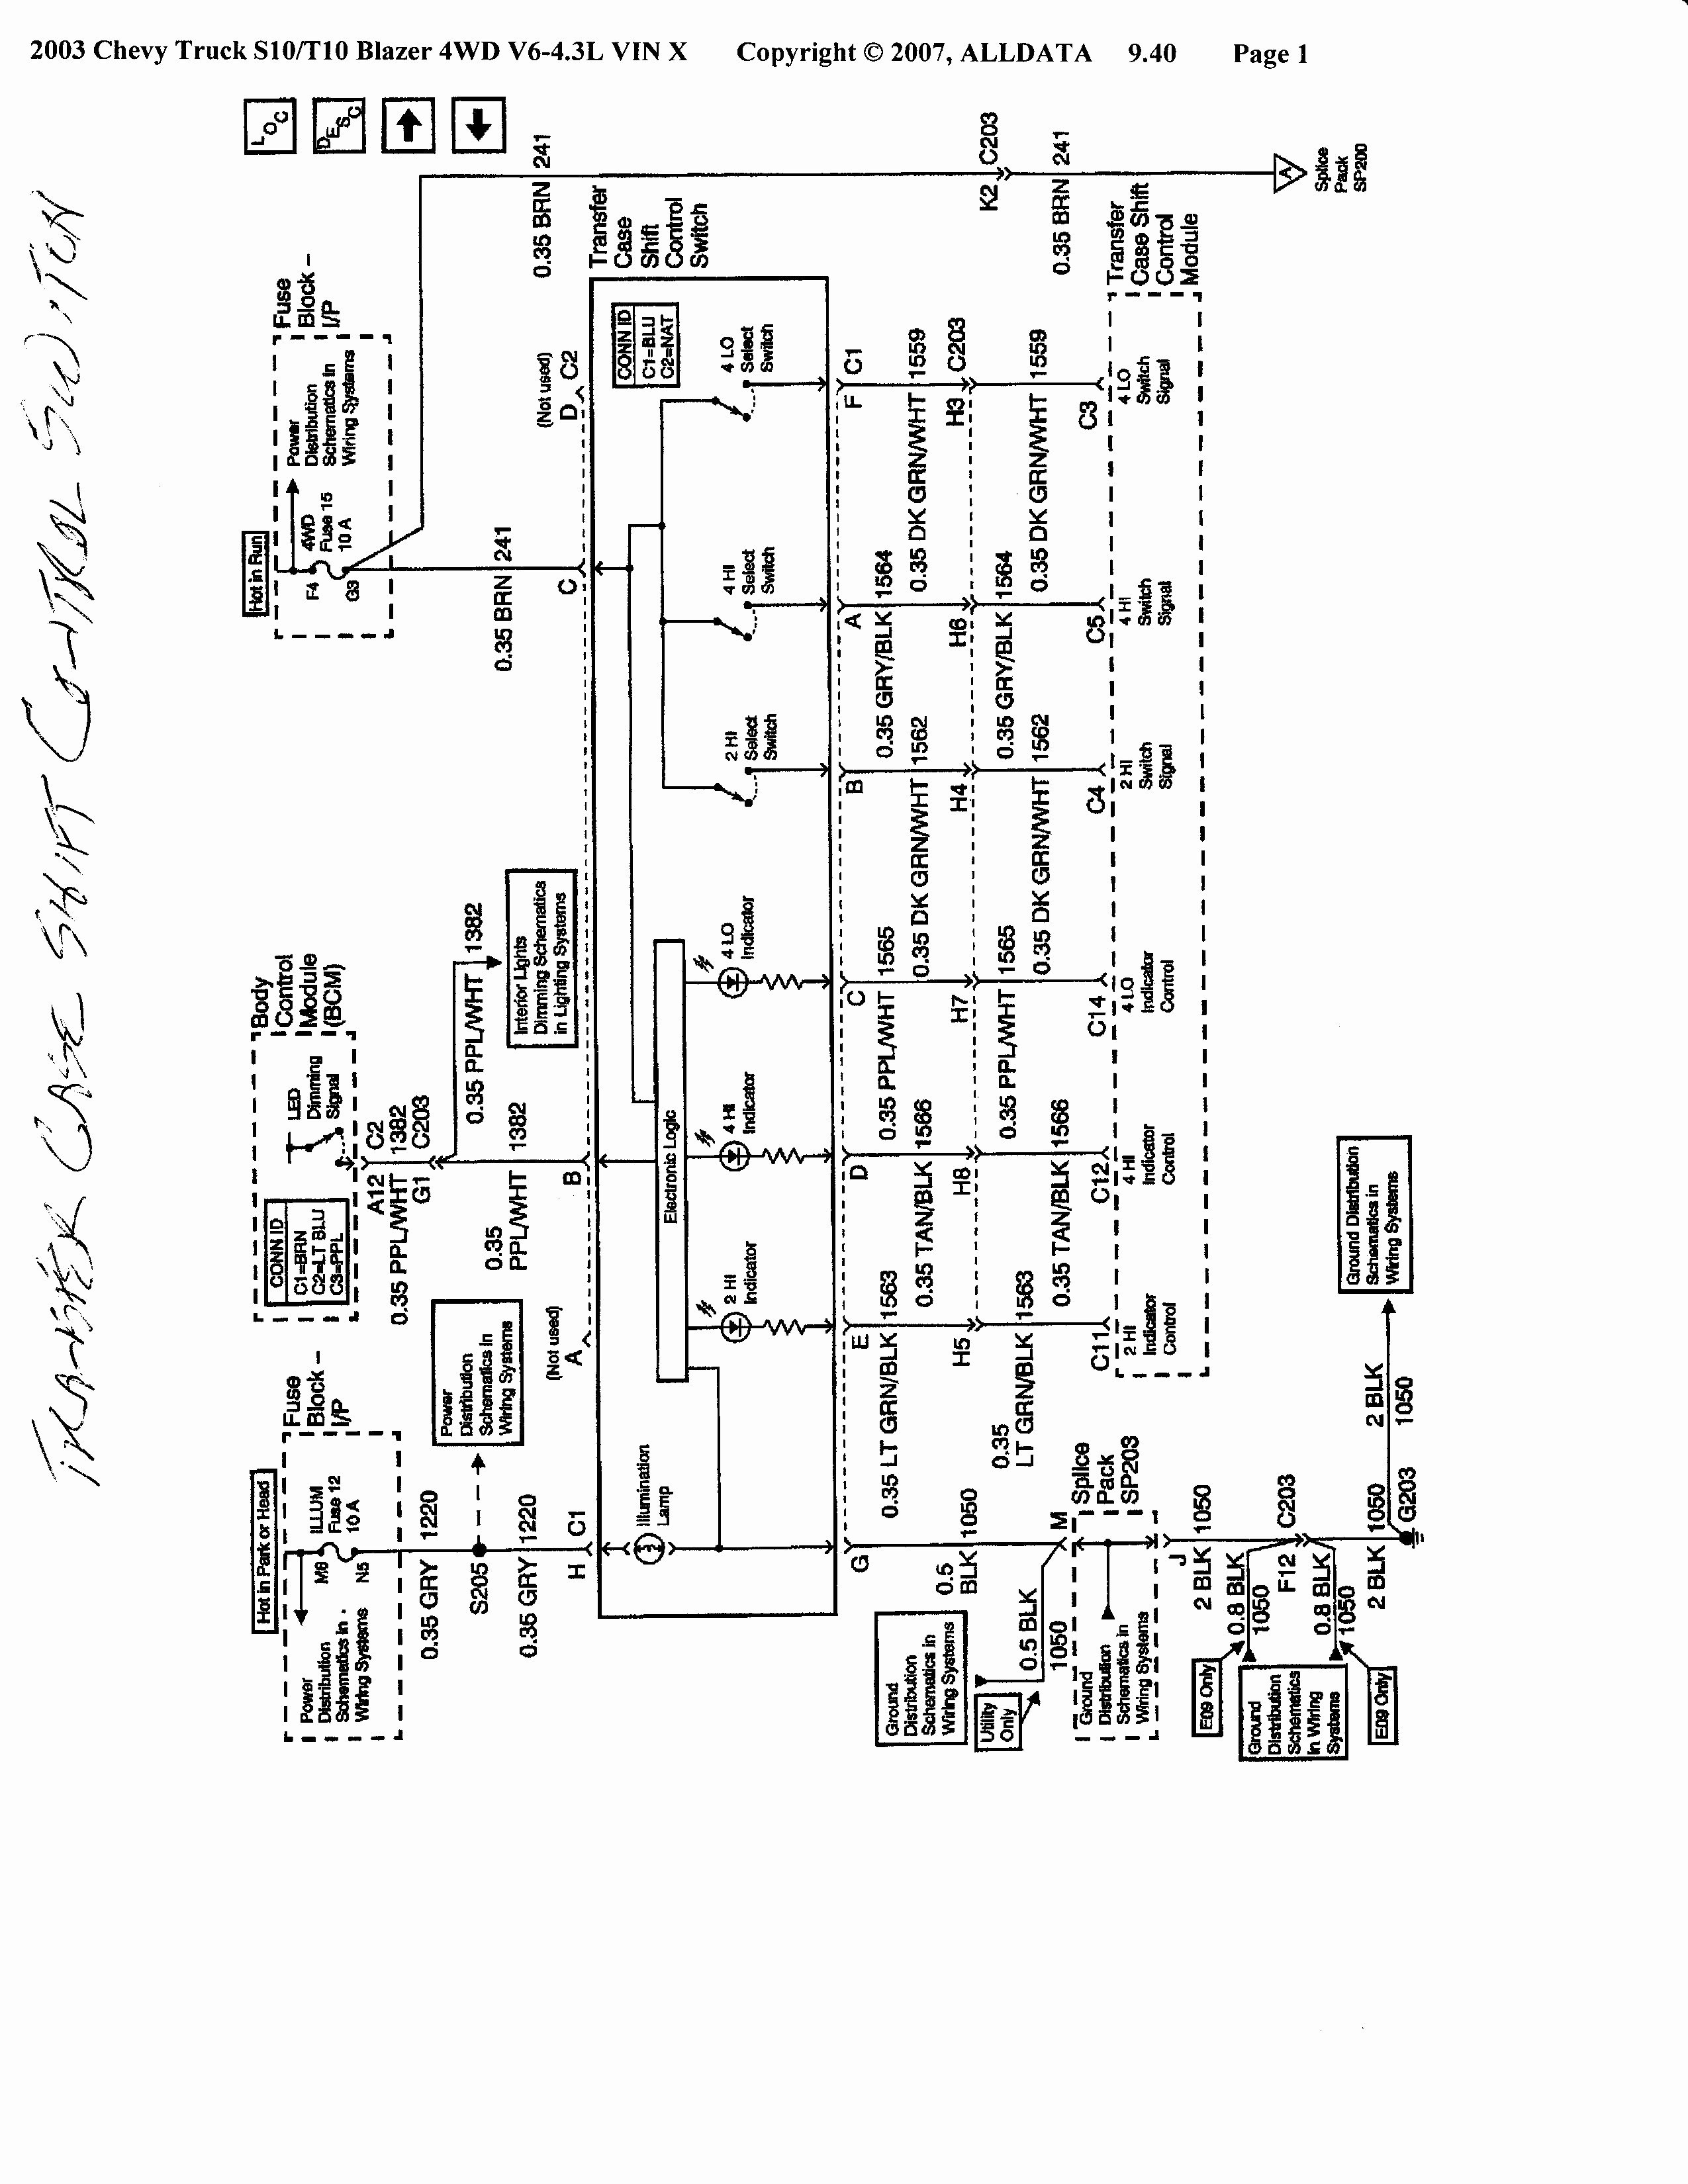 1996 Chevy S10 Wiring Diagram 96 S10 Wiring Diagram Trusted Wiring Diagram Of 1996 Chevy S10 Wiring Diagram